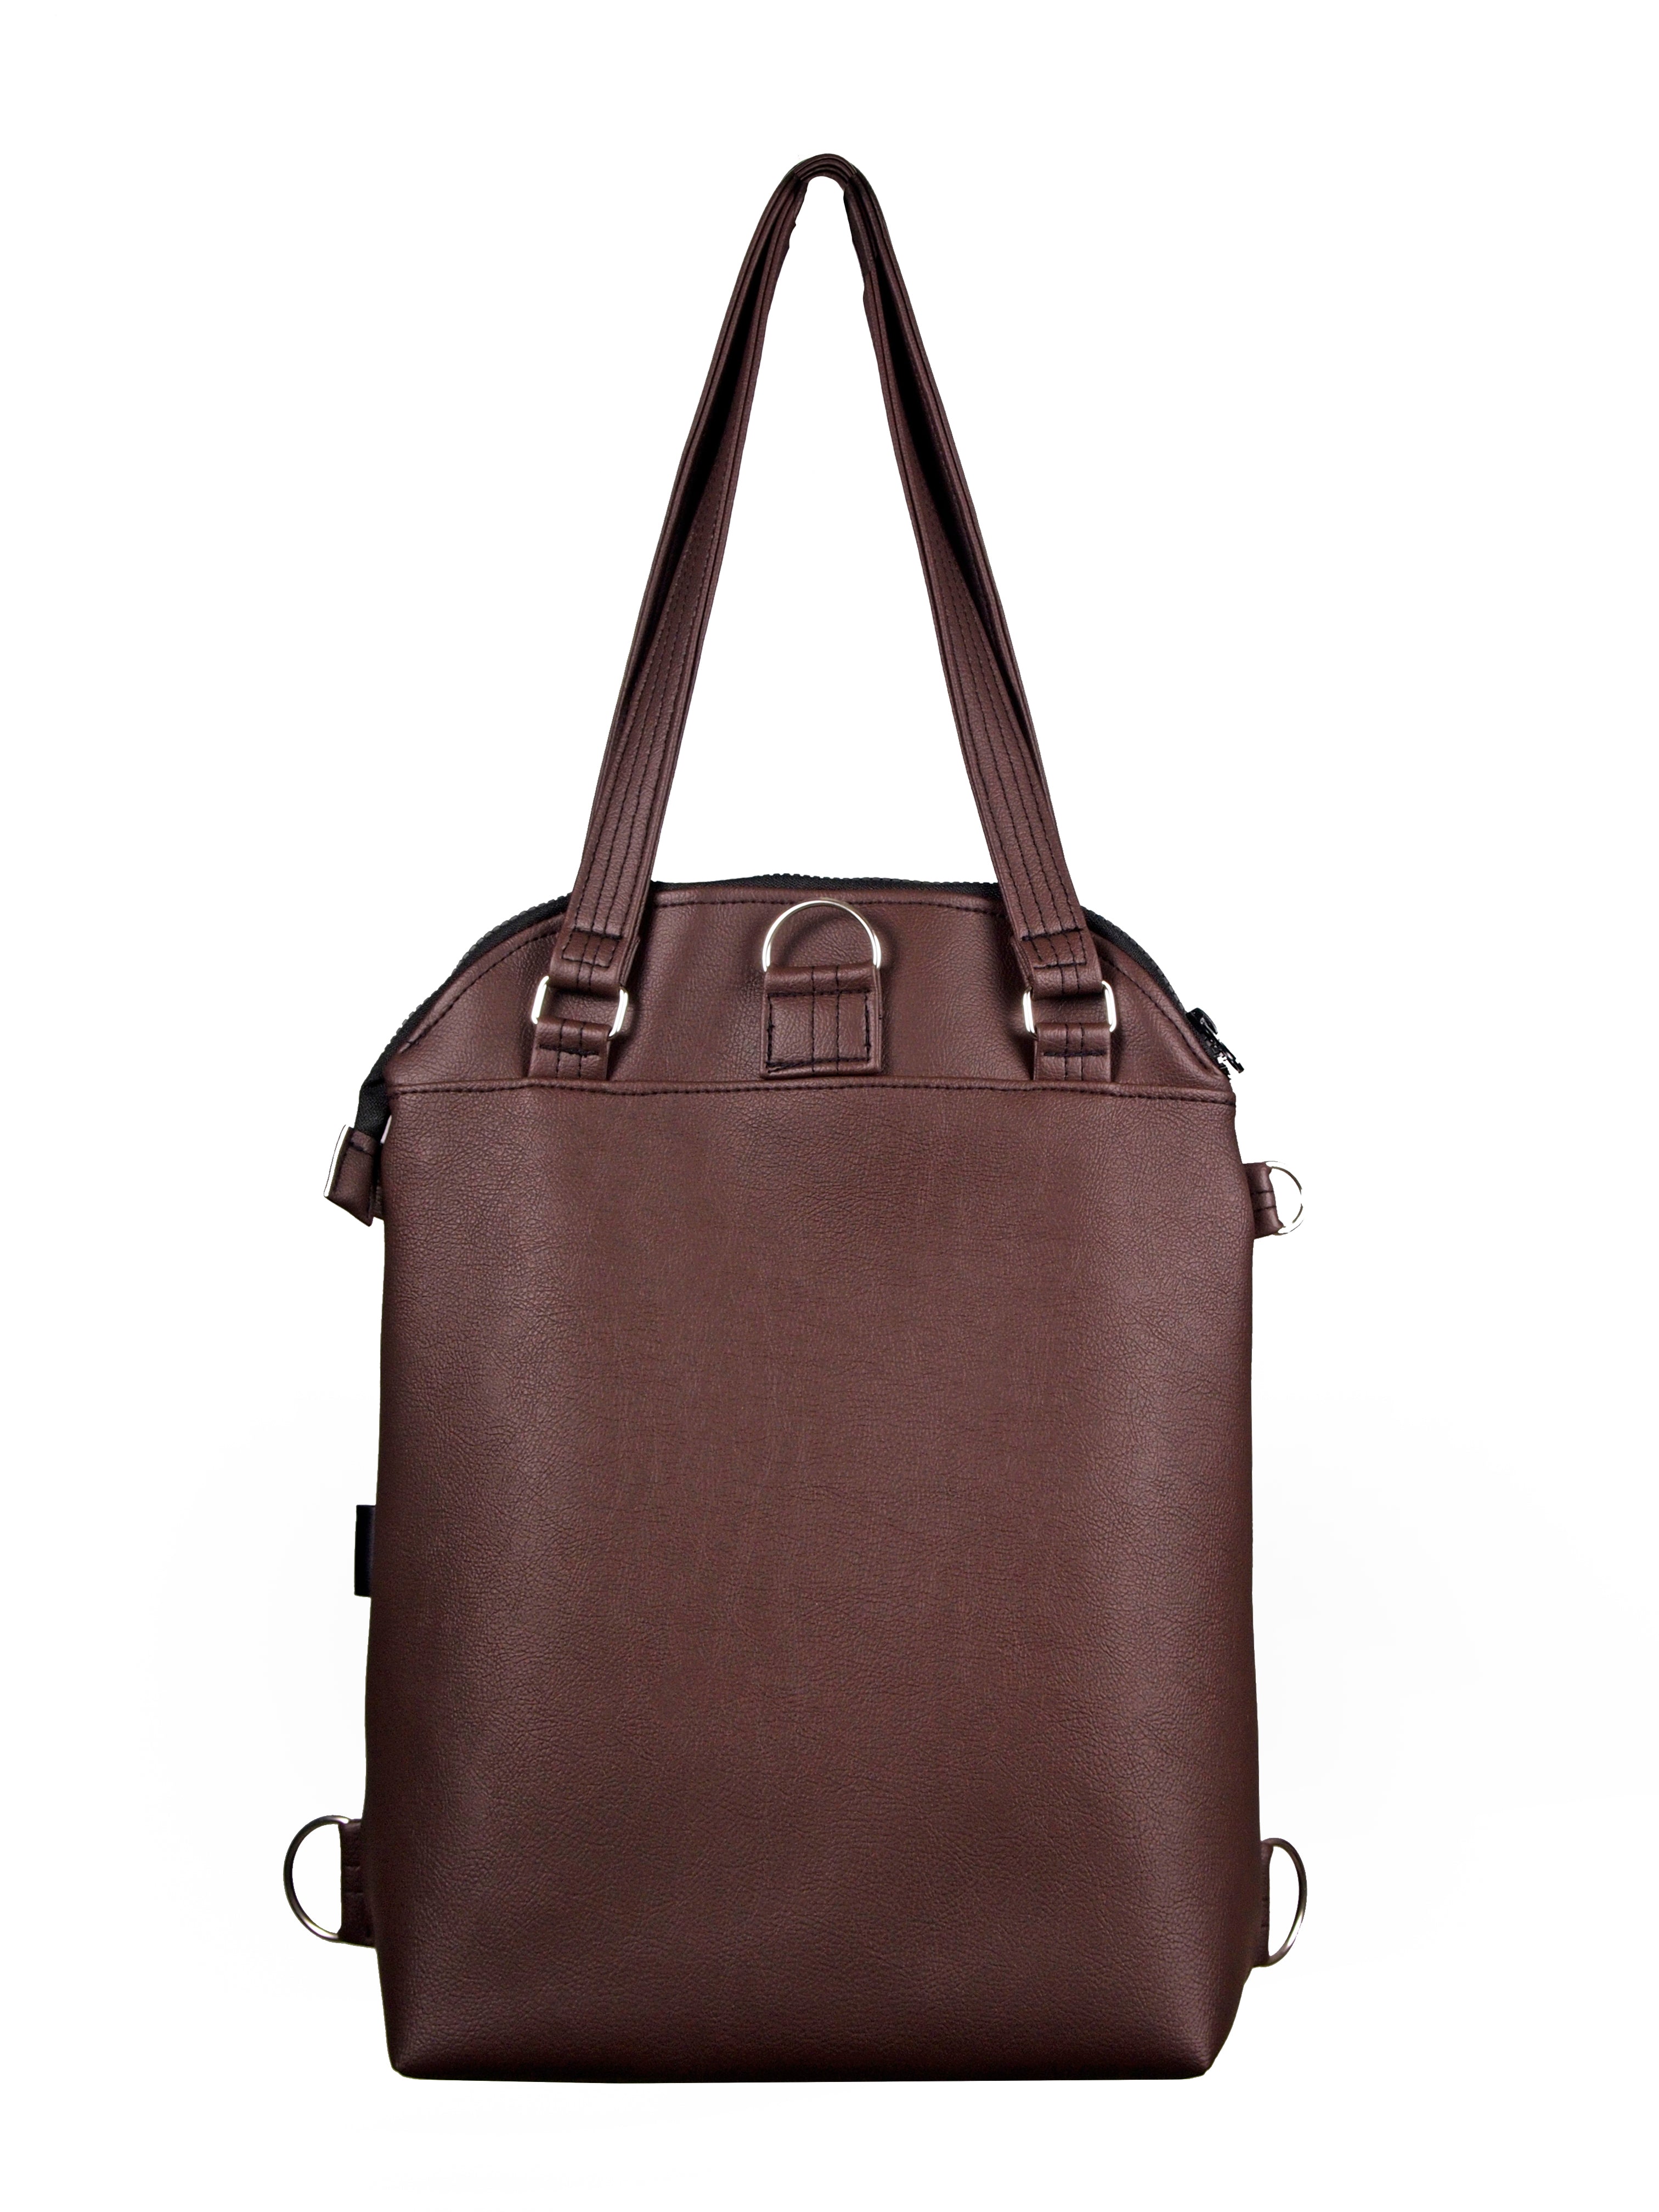 Bardo classic bag&backpack - Chocolate & canela - Premium  from BARDO ART WORKS - Just lv89.00! Shop now at BARDO ART WORKS